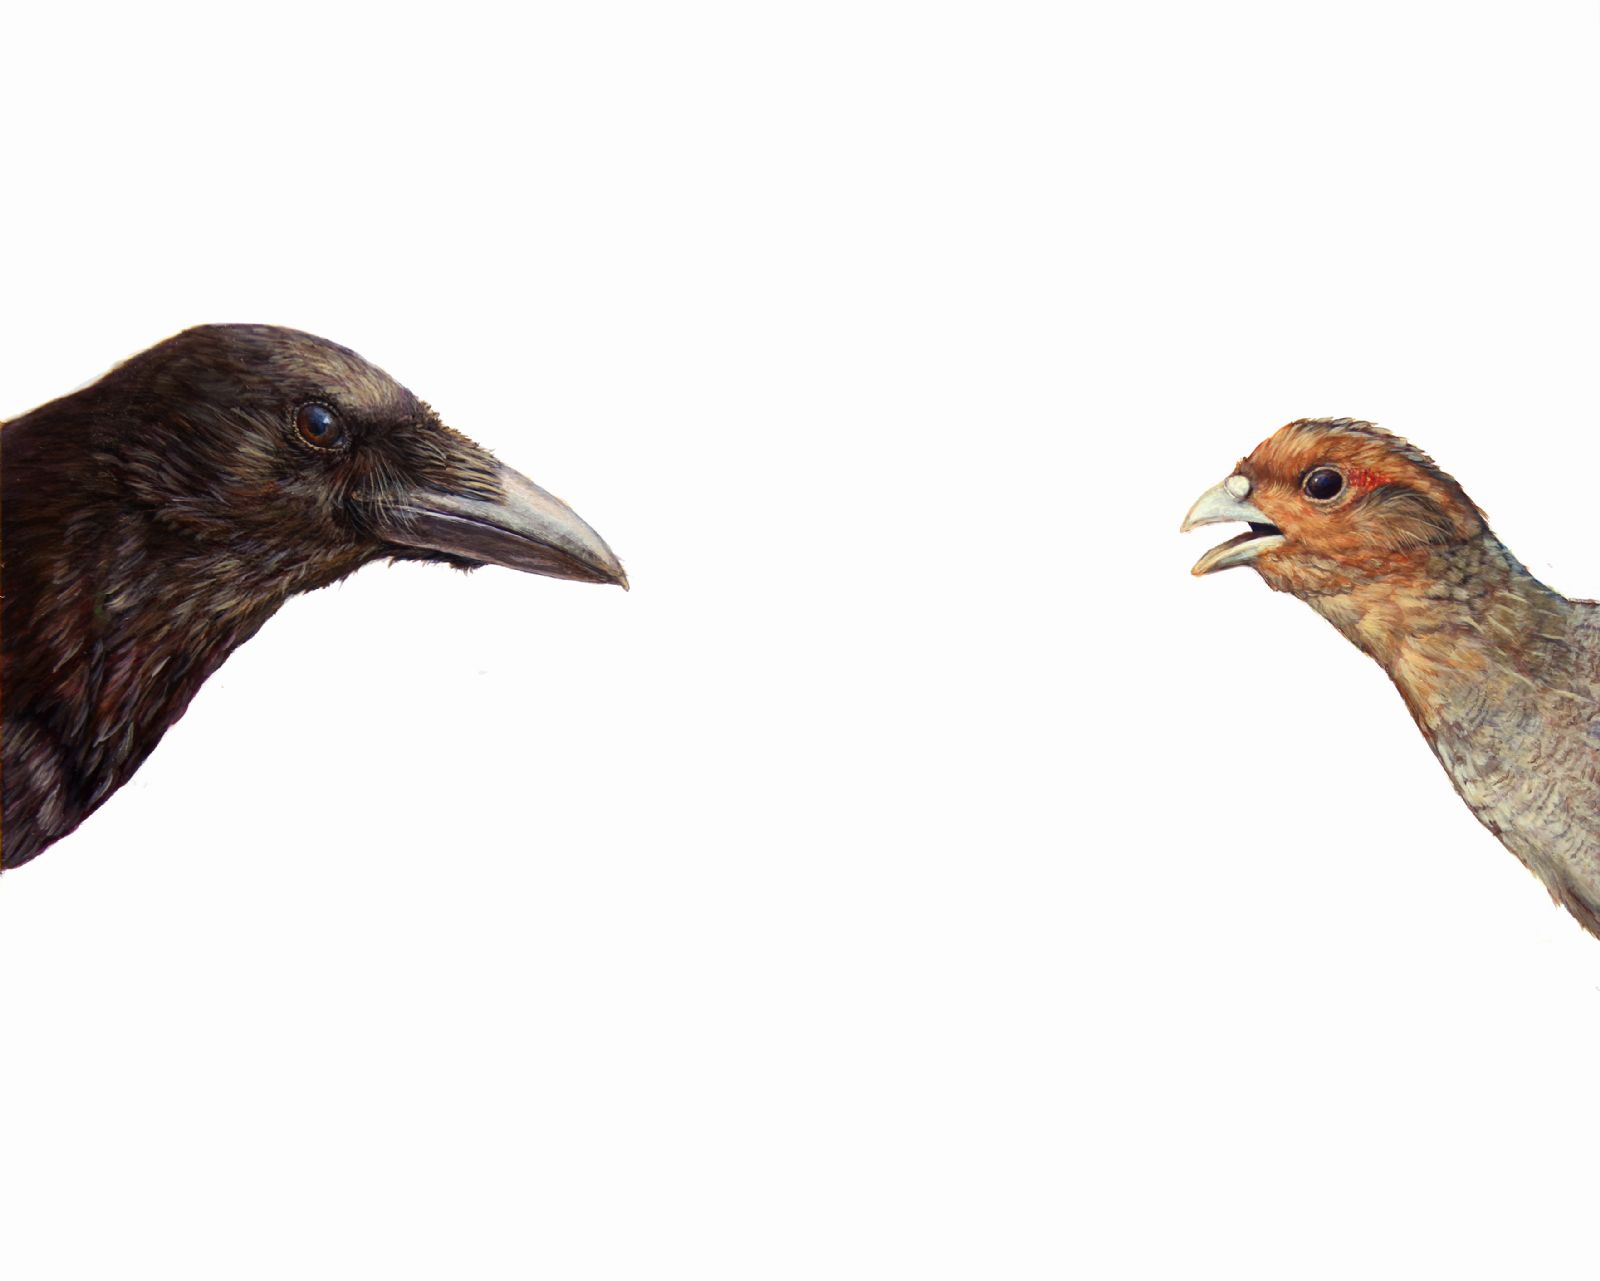 Top Predator: Crow & Partridge by Hazel Mountford